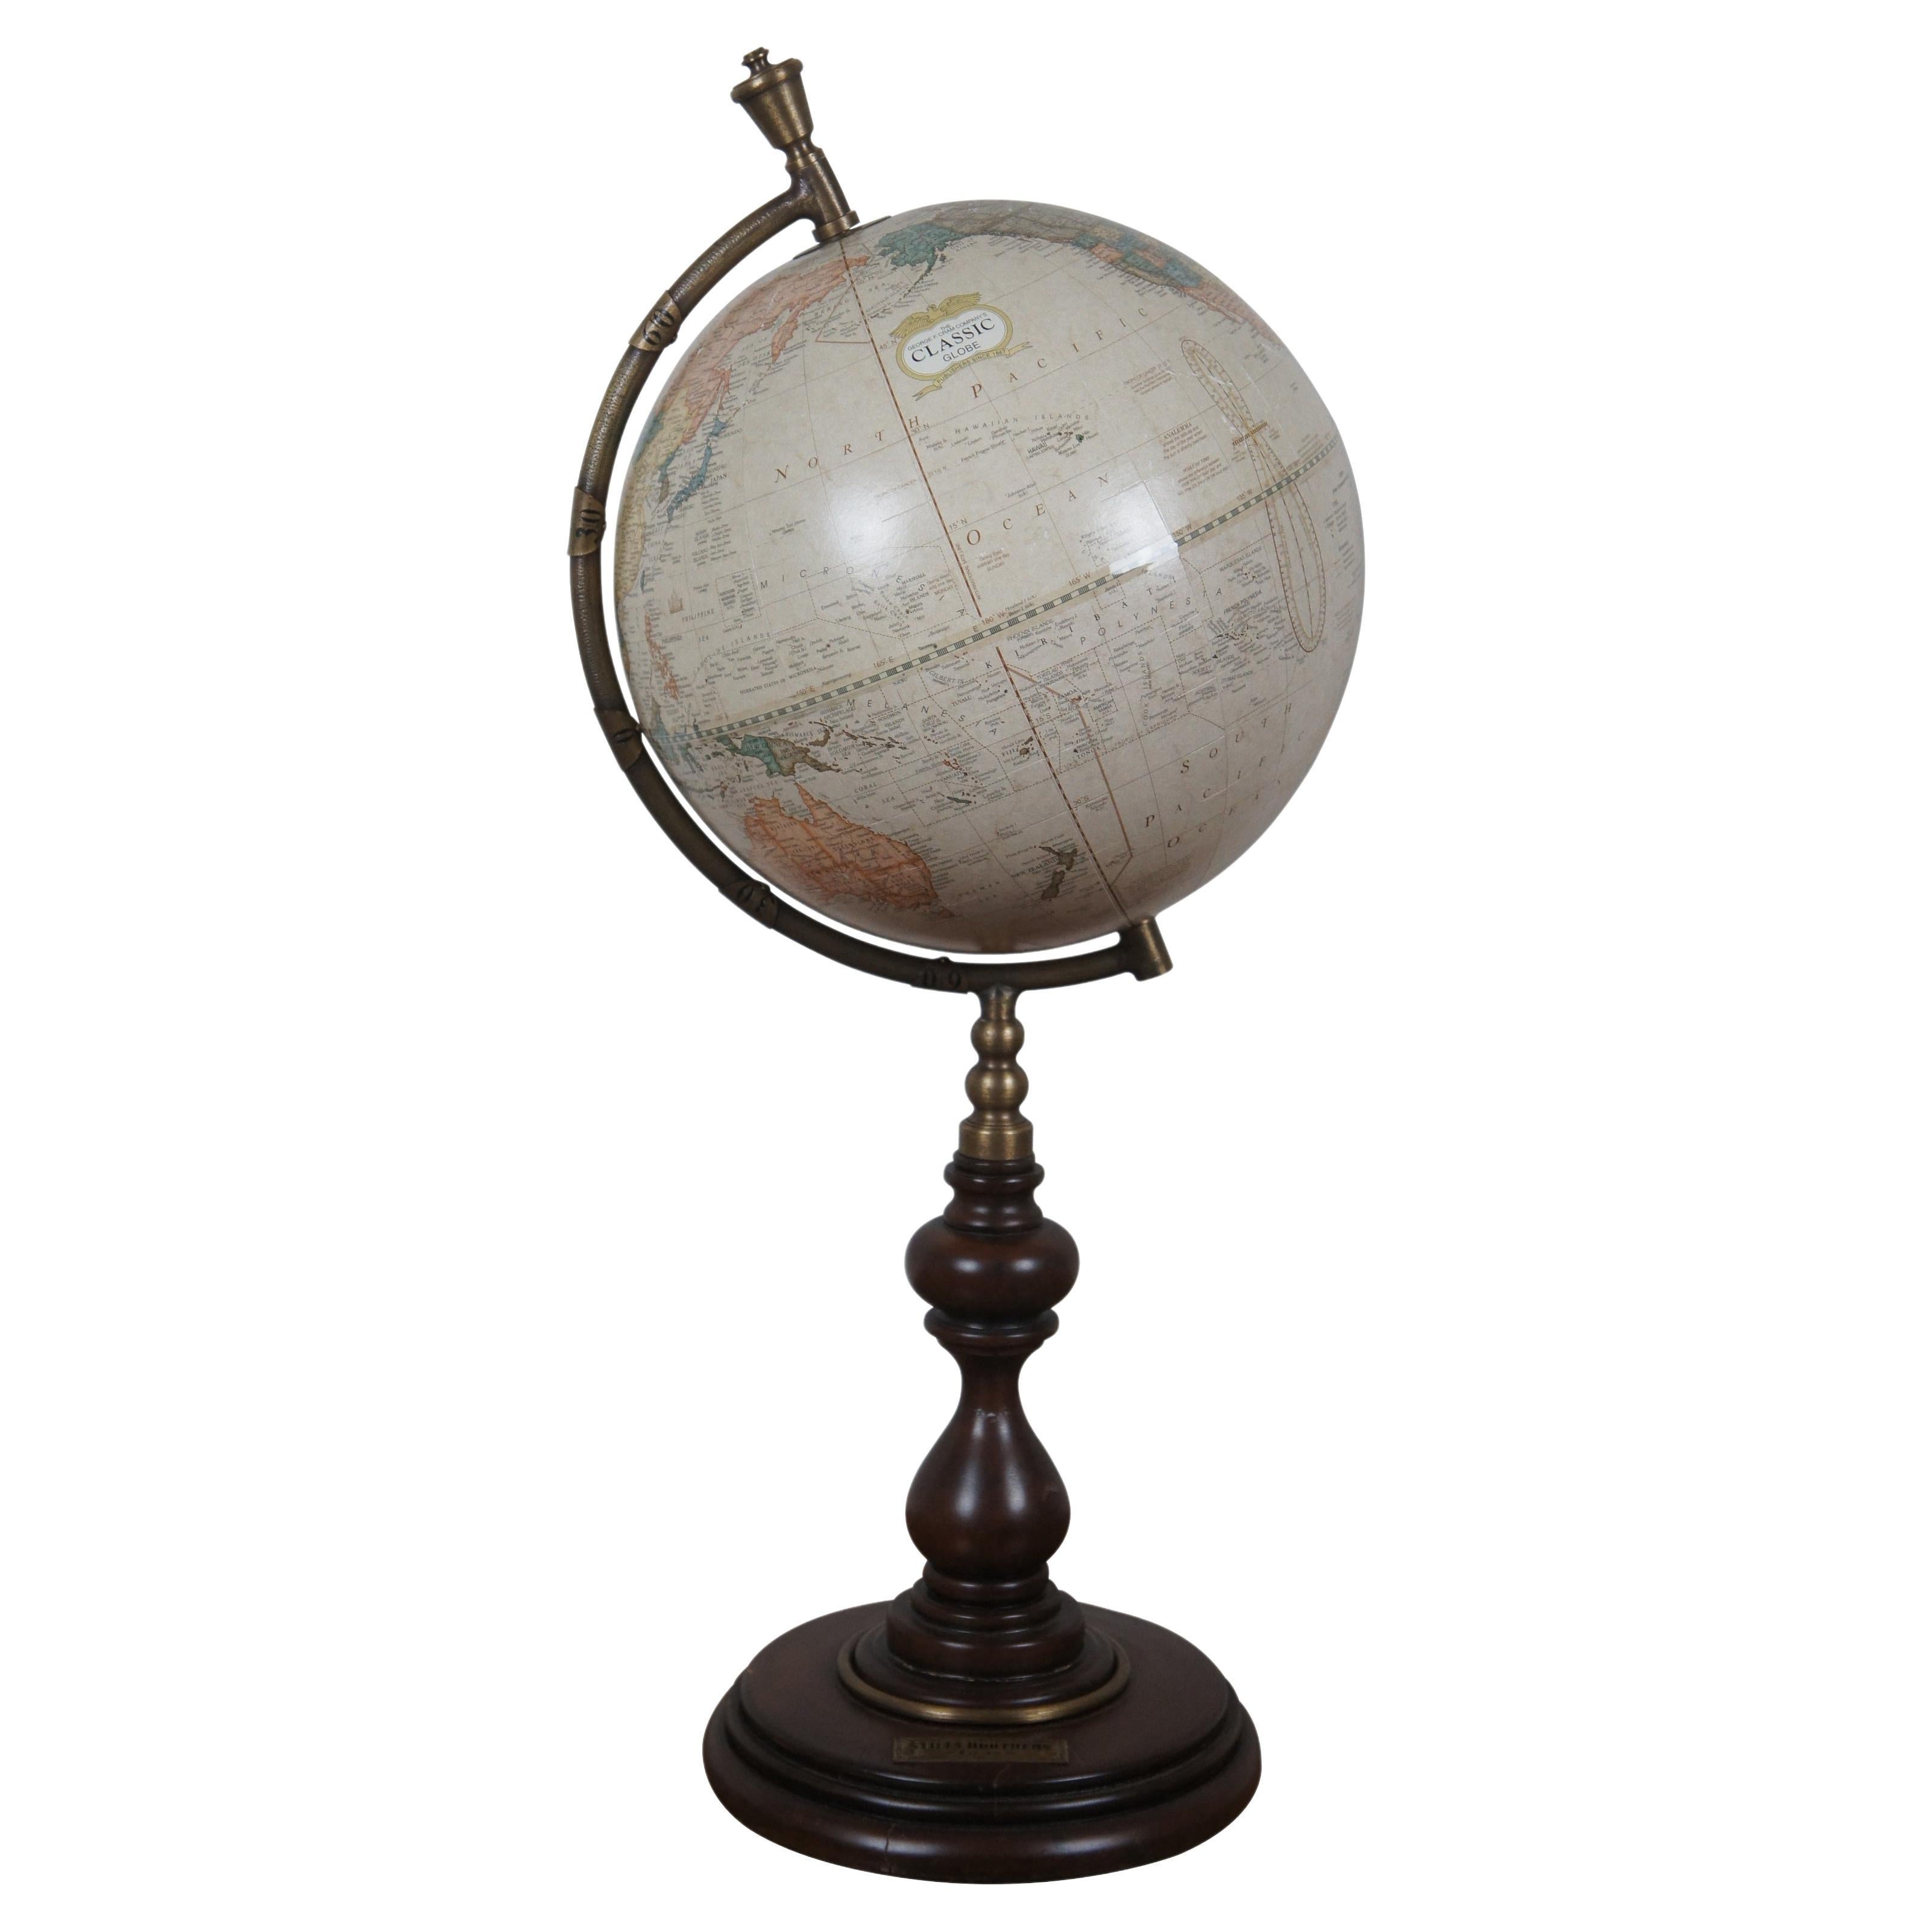 Stiles Brothers George F Cram Co Classic Desktop Globe on Wood Stand 10"